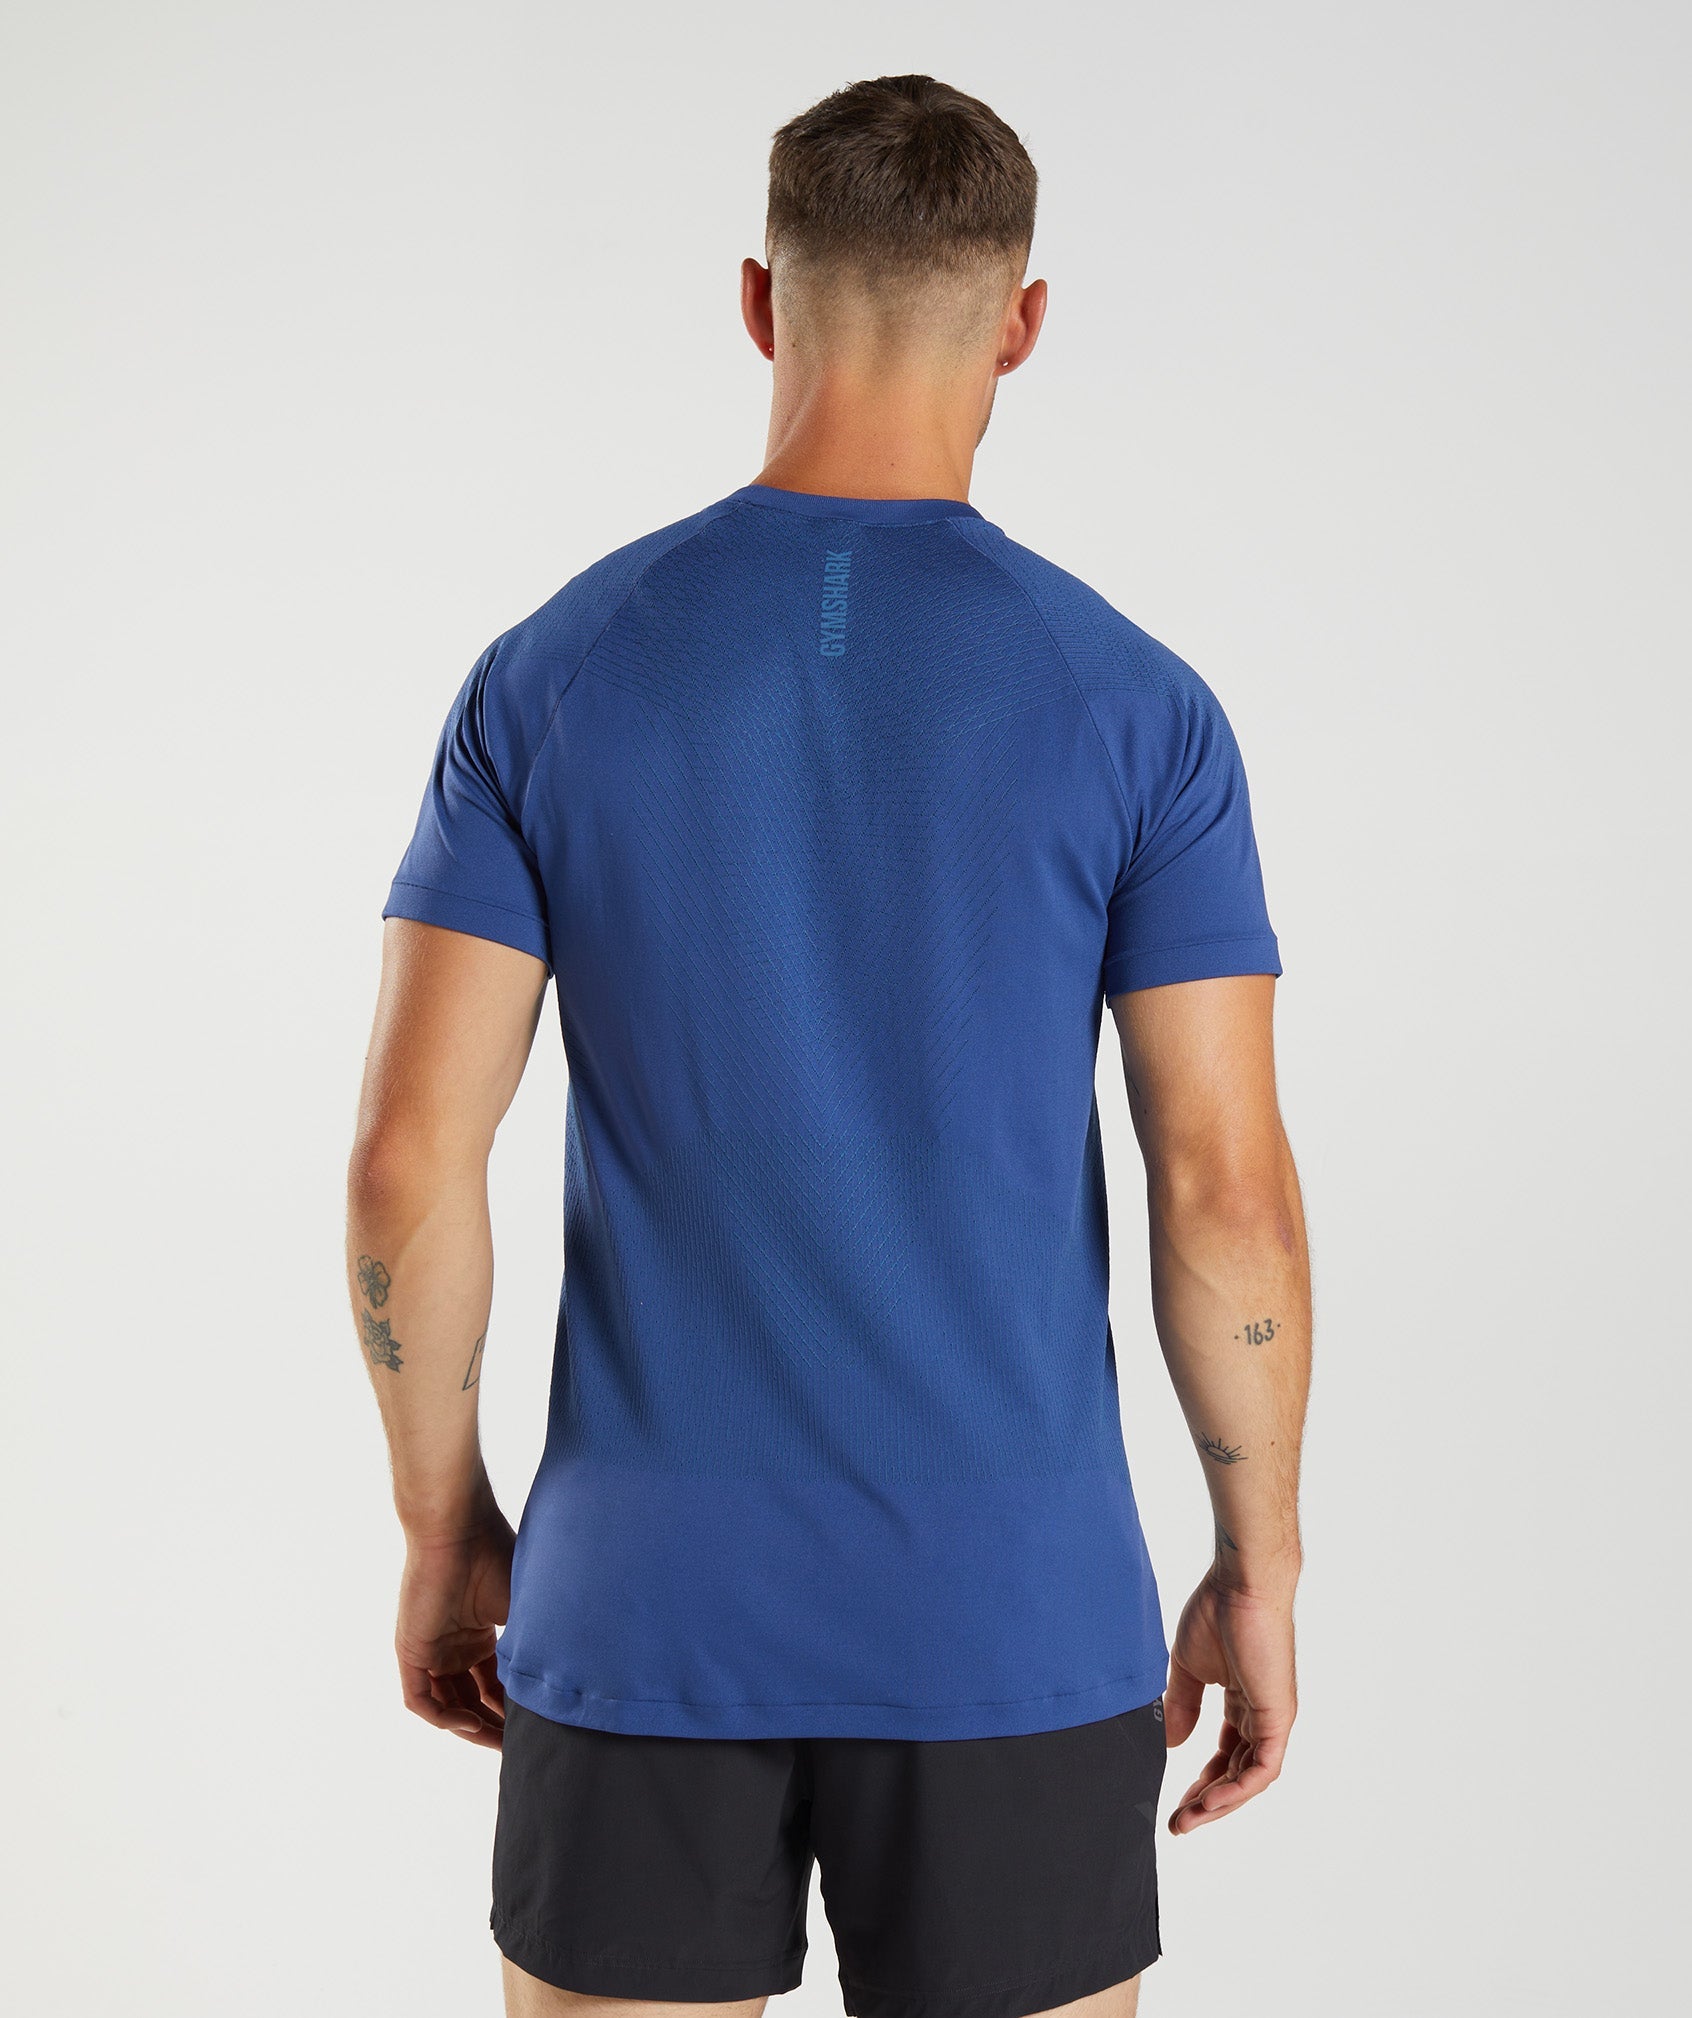 Apex Seamless T-Shirt in Stellar Blue/Lakeside Blue - view 2